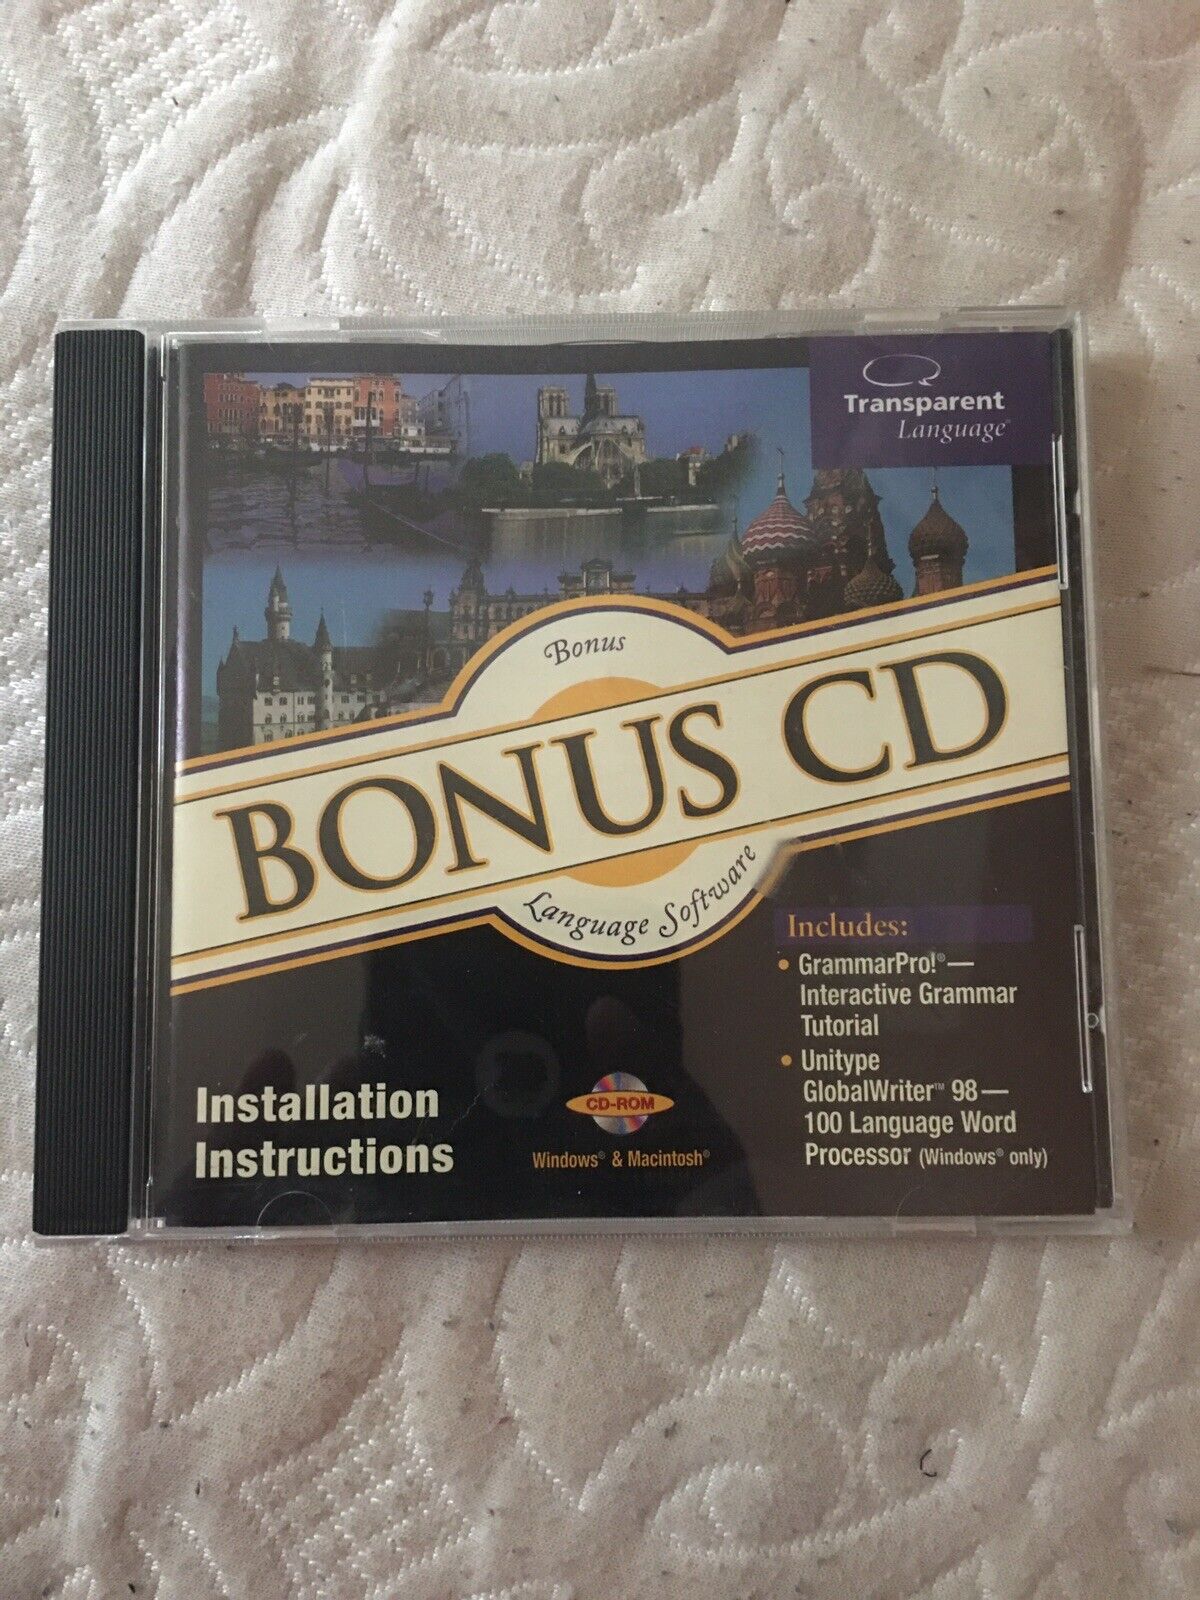 Transparent Language Bonus CD - GrammarPro - Software for PC Windows